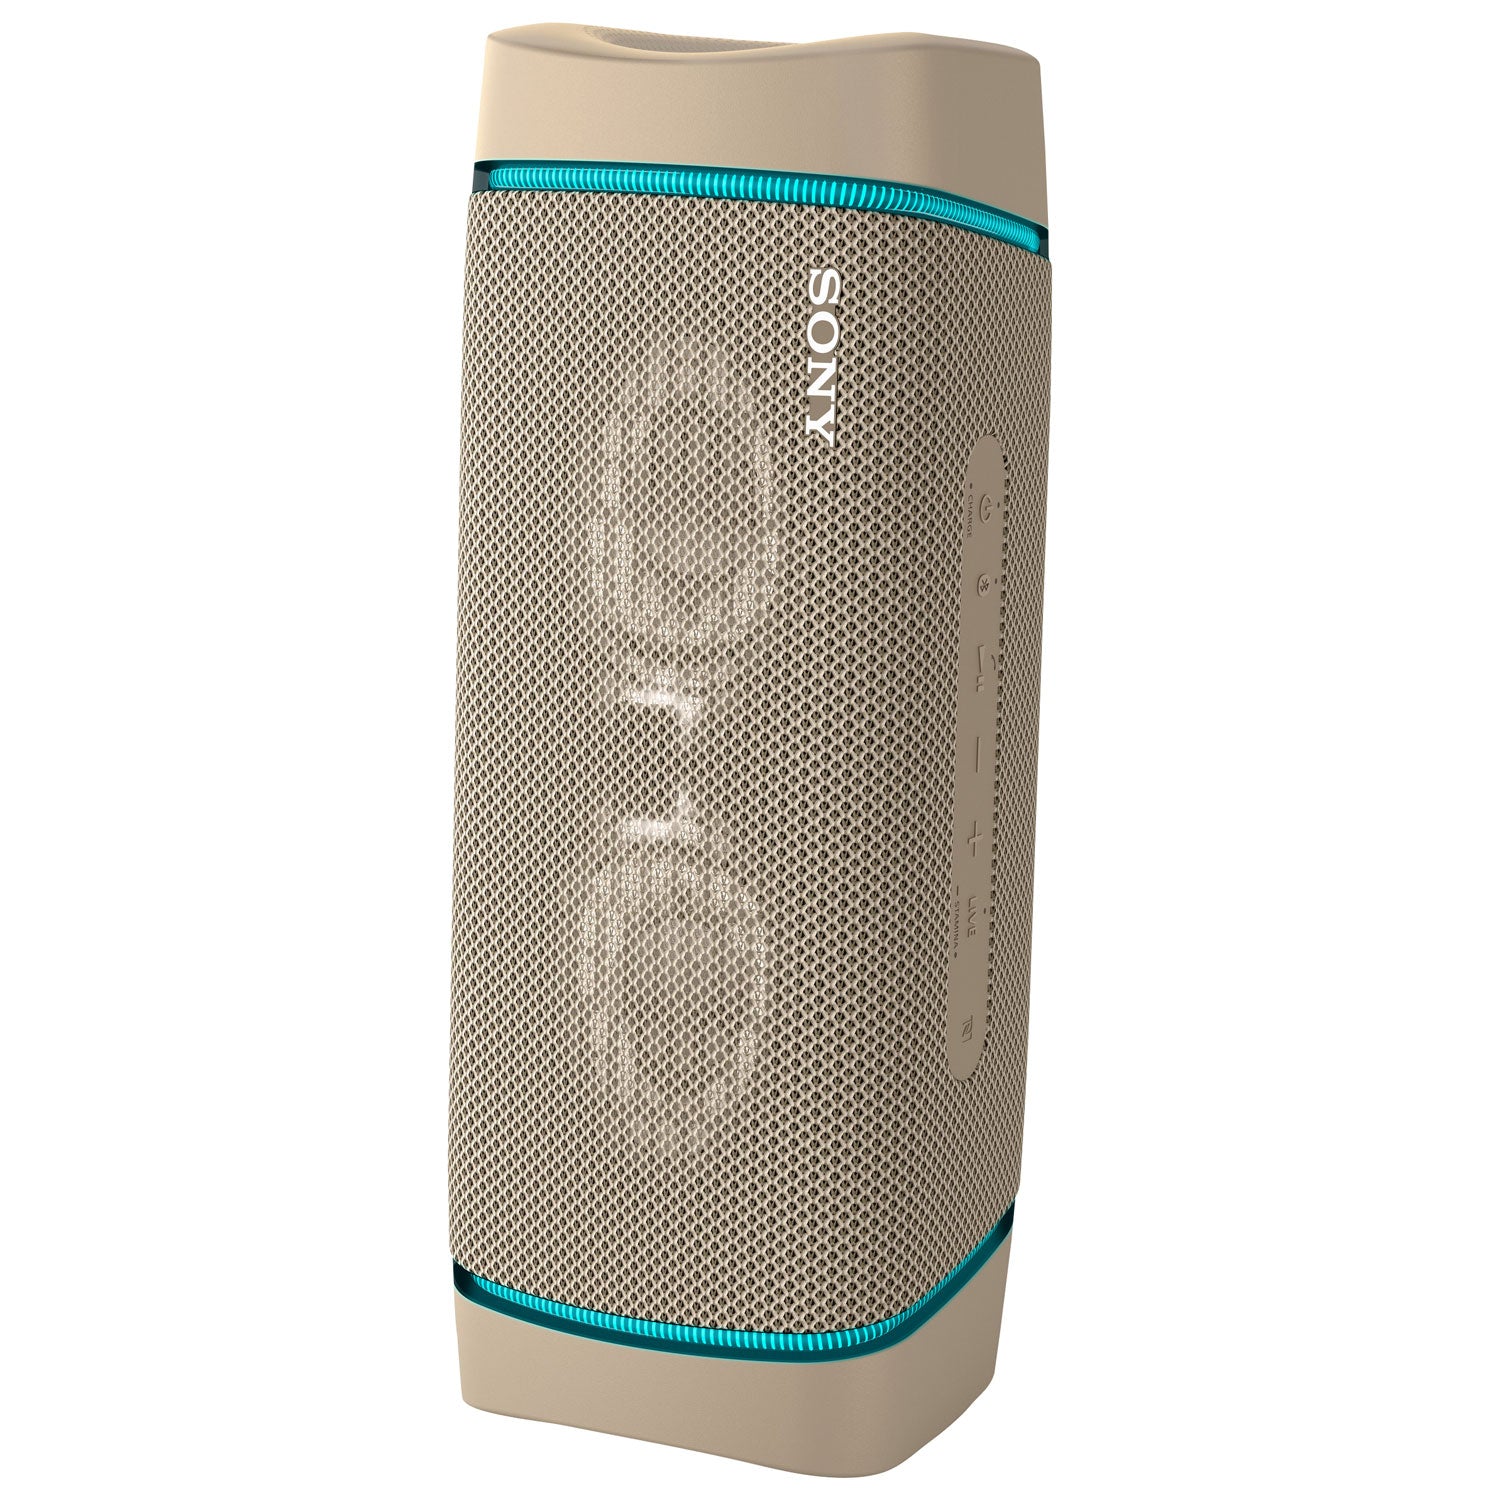 Sony SRS-XB33 EXTRA BASS Waterproof Bluetooth Wireless Speaker - Cream